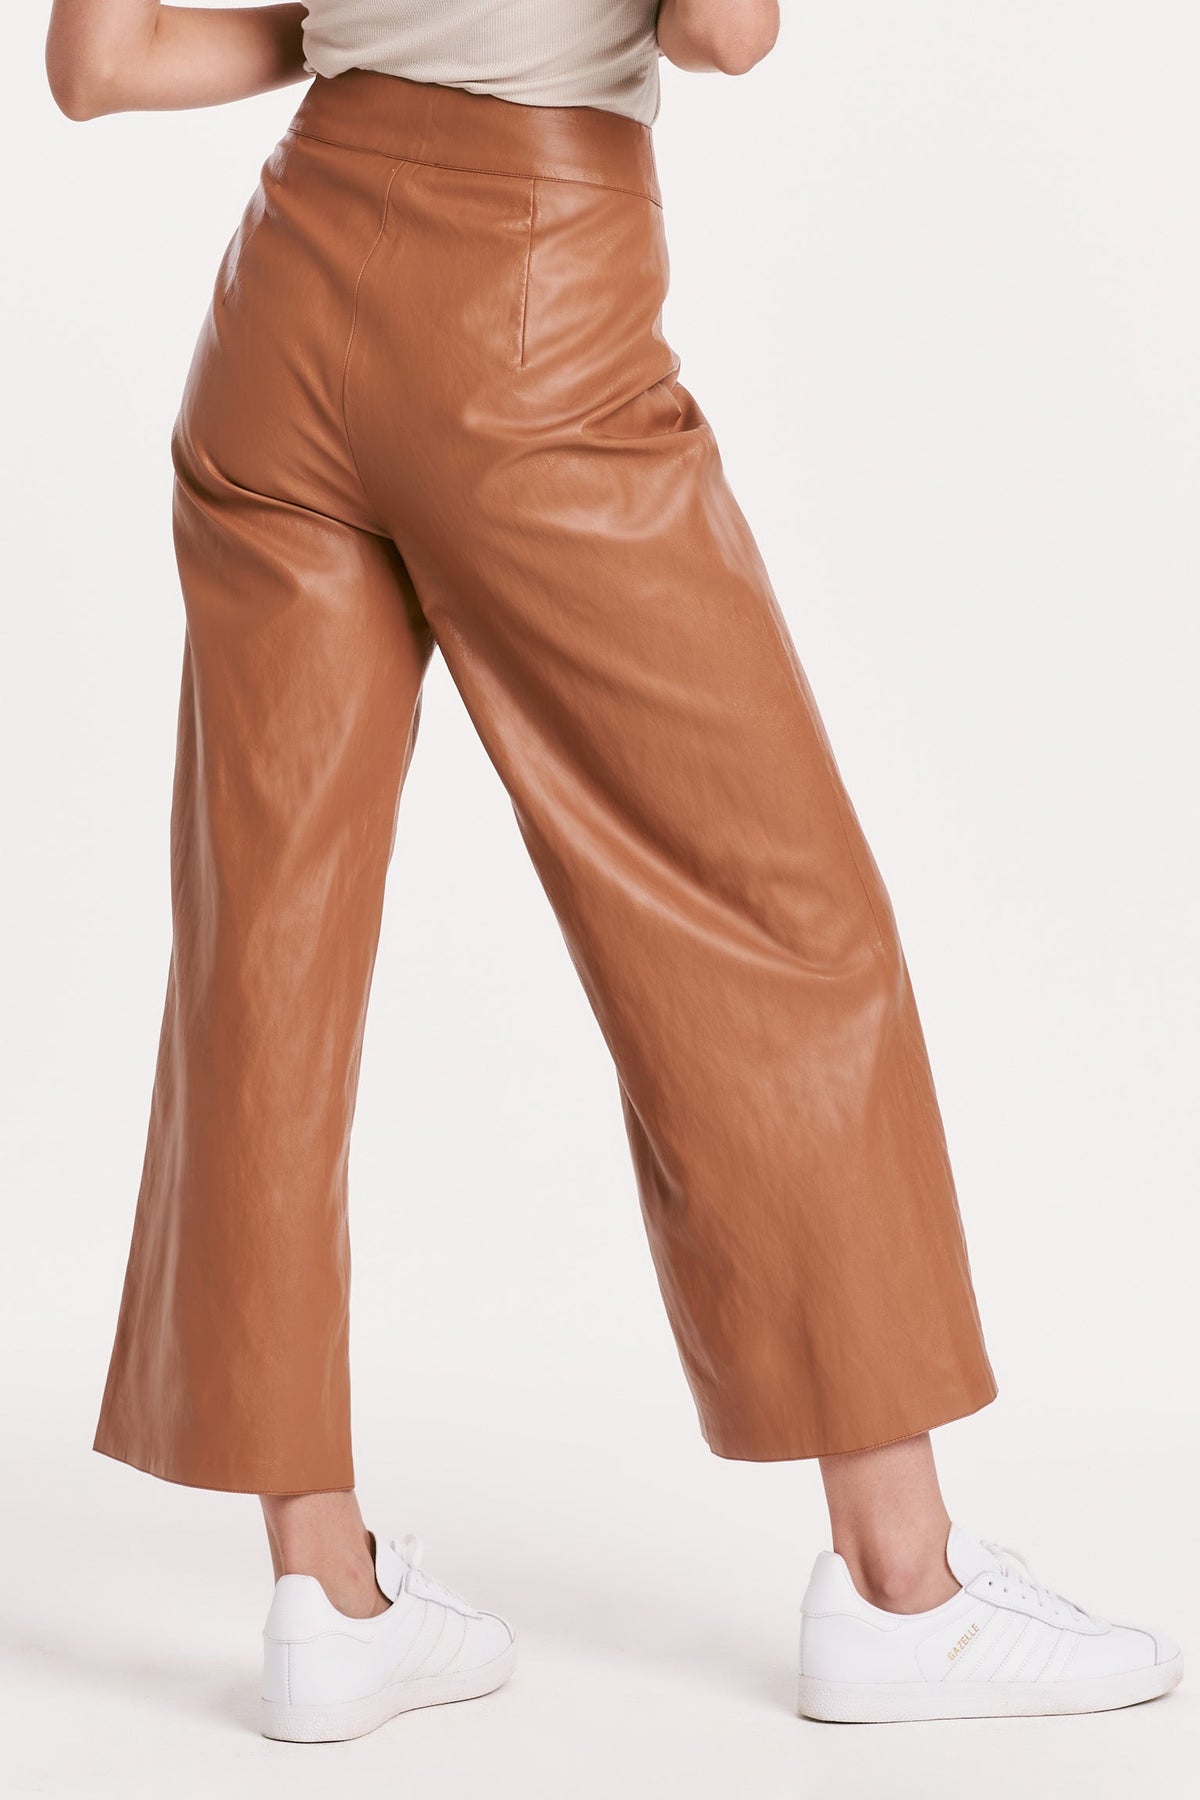 sparkle-wide-leg-cropped-pant-saddle-vegan-leather